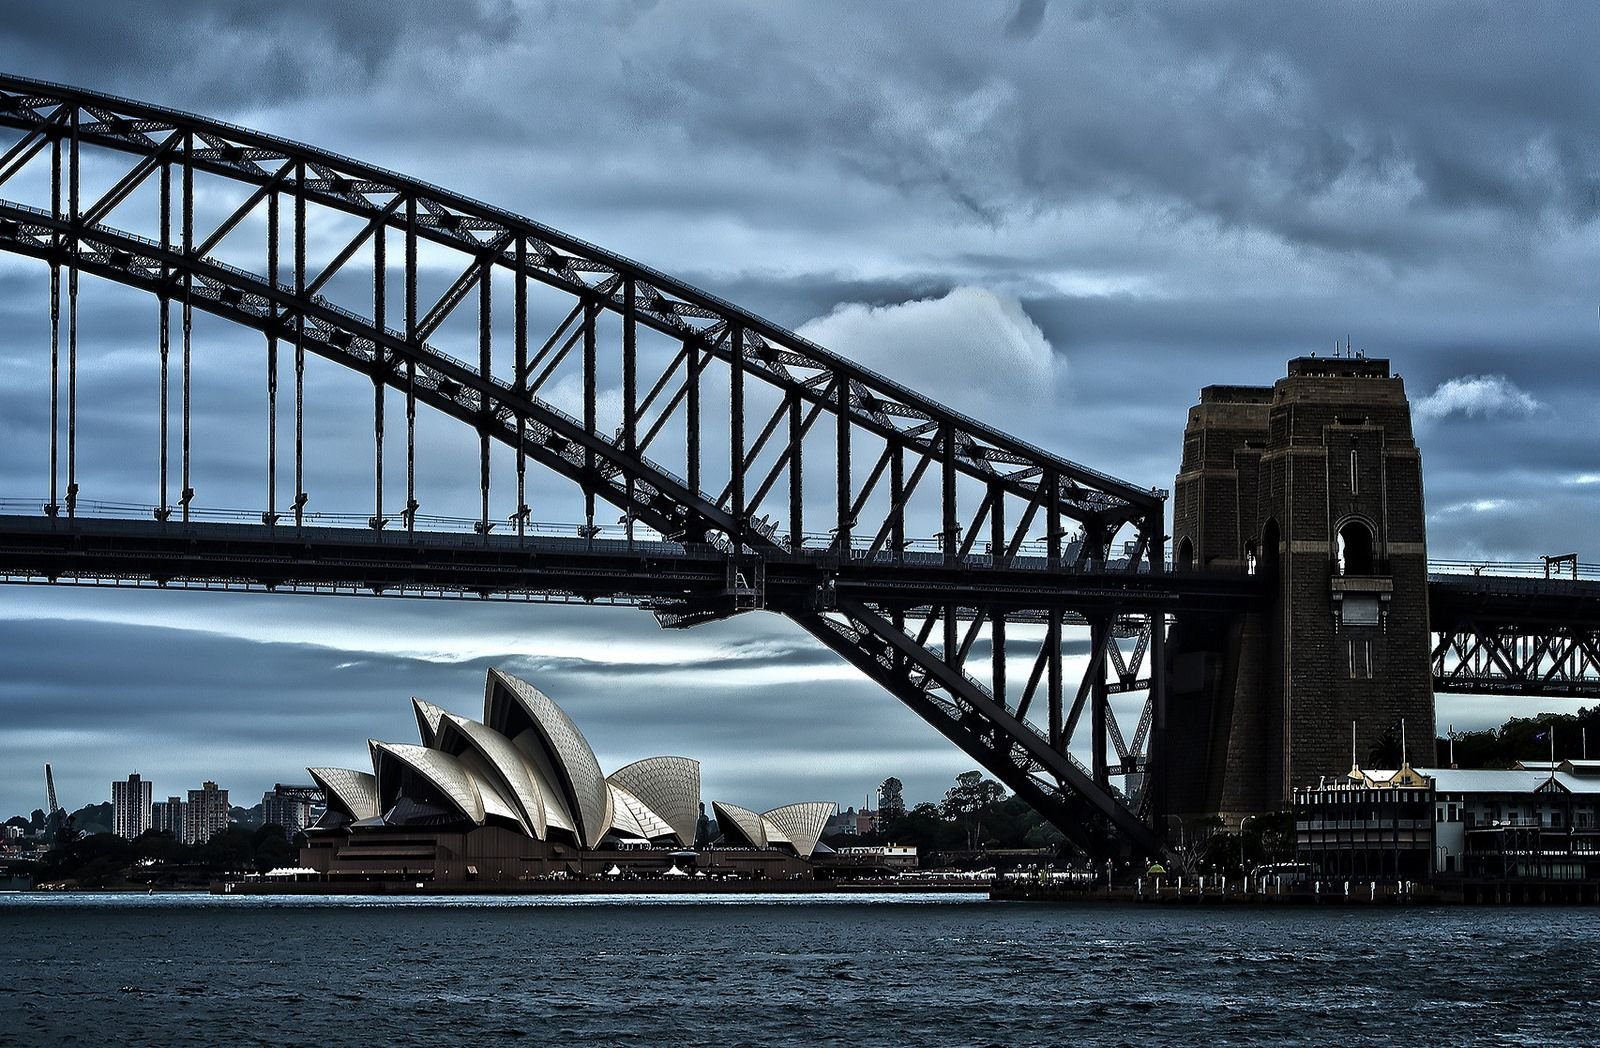 Harbour bridge. Сиднейский Харбор-бридж. Мост Харбор-бридж в Сиднее. Мост Харбор бридж в Австралии. Мост Окленд Харбор бридж.